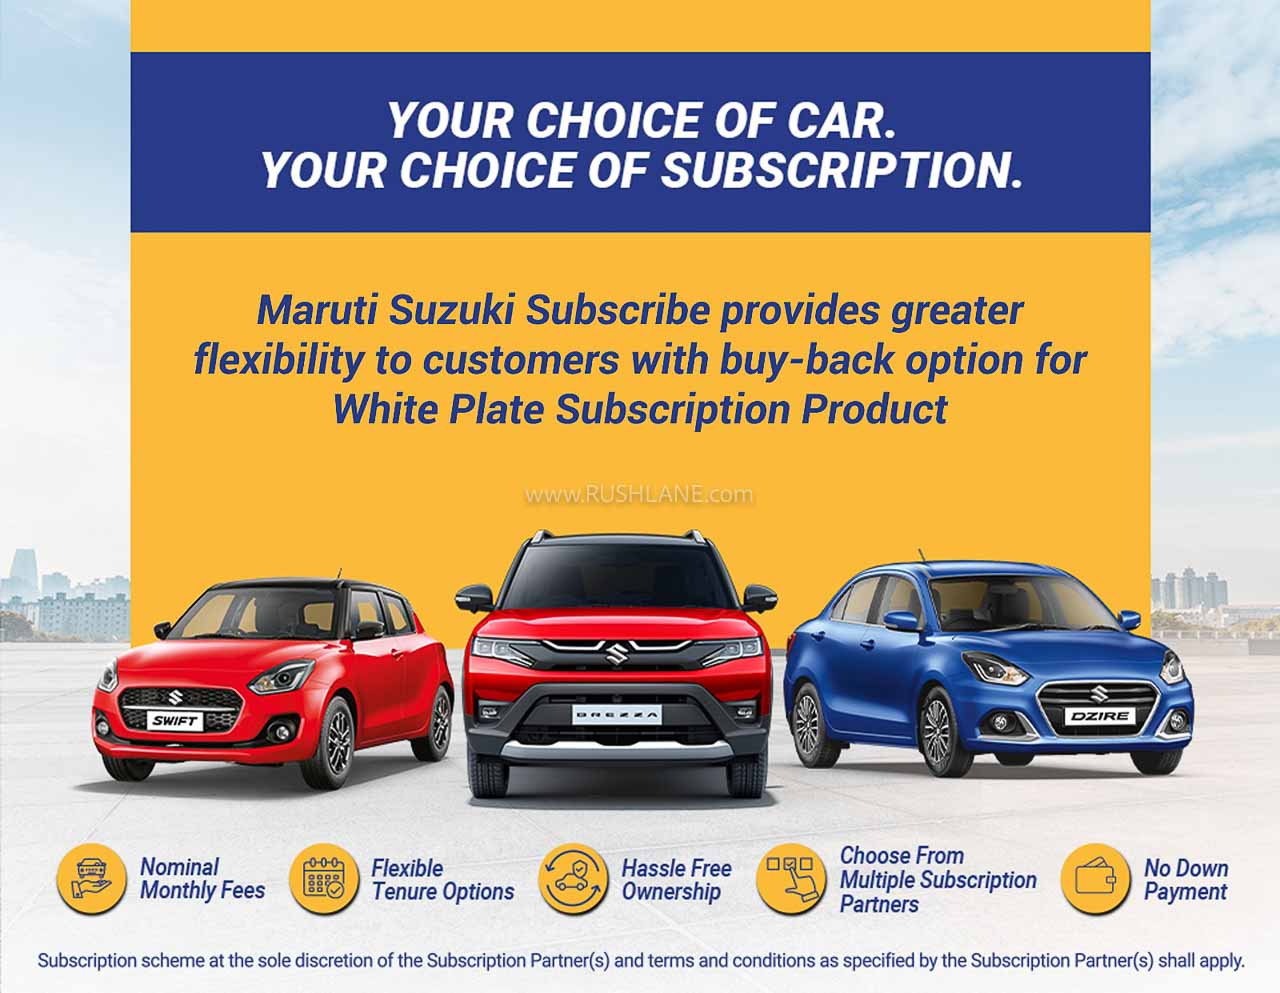 Maruti Suzuki Subscribe introduces Pre-Fixed Buy-Back Price option